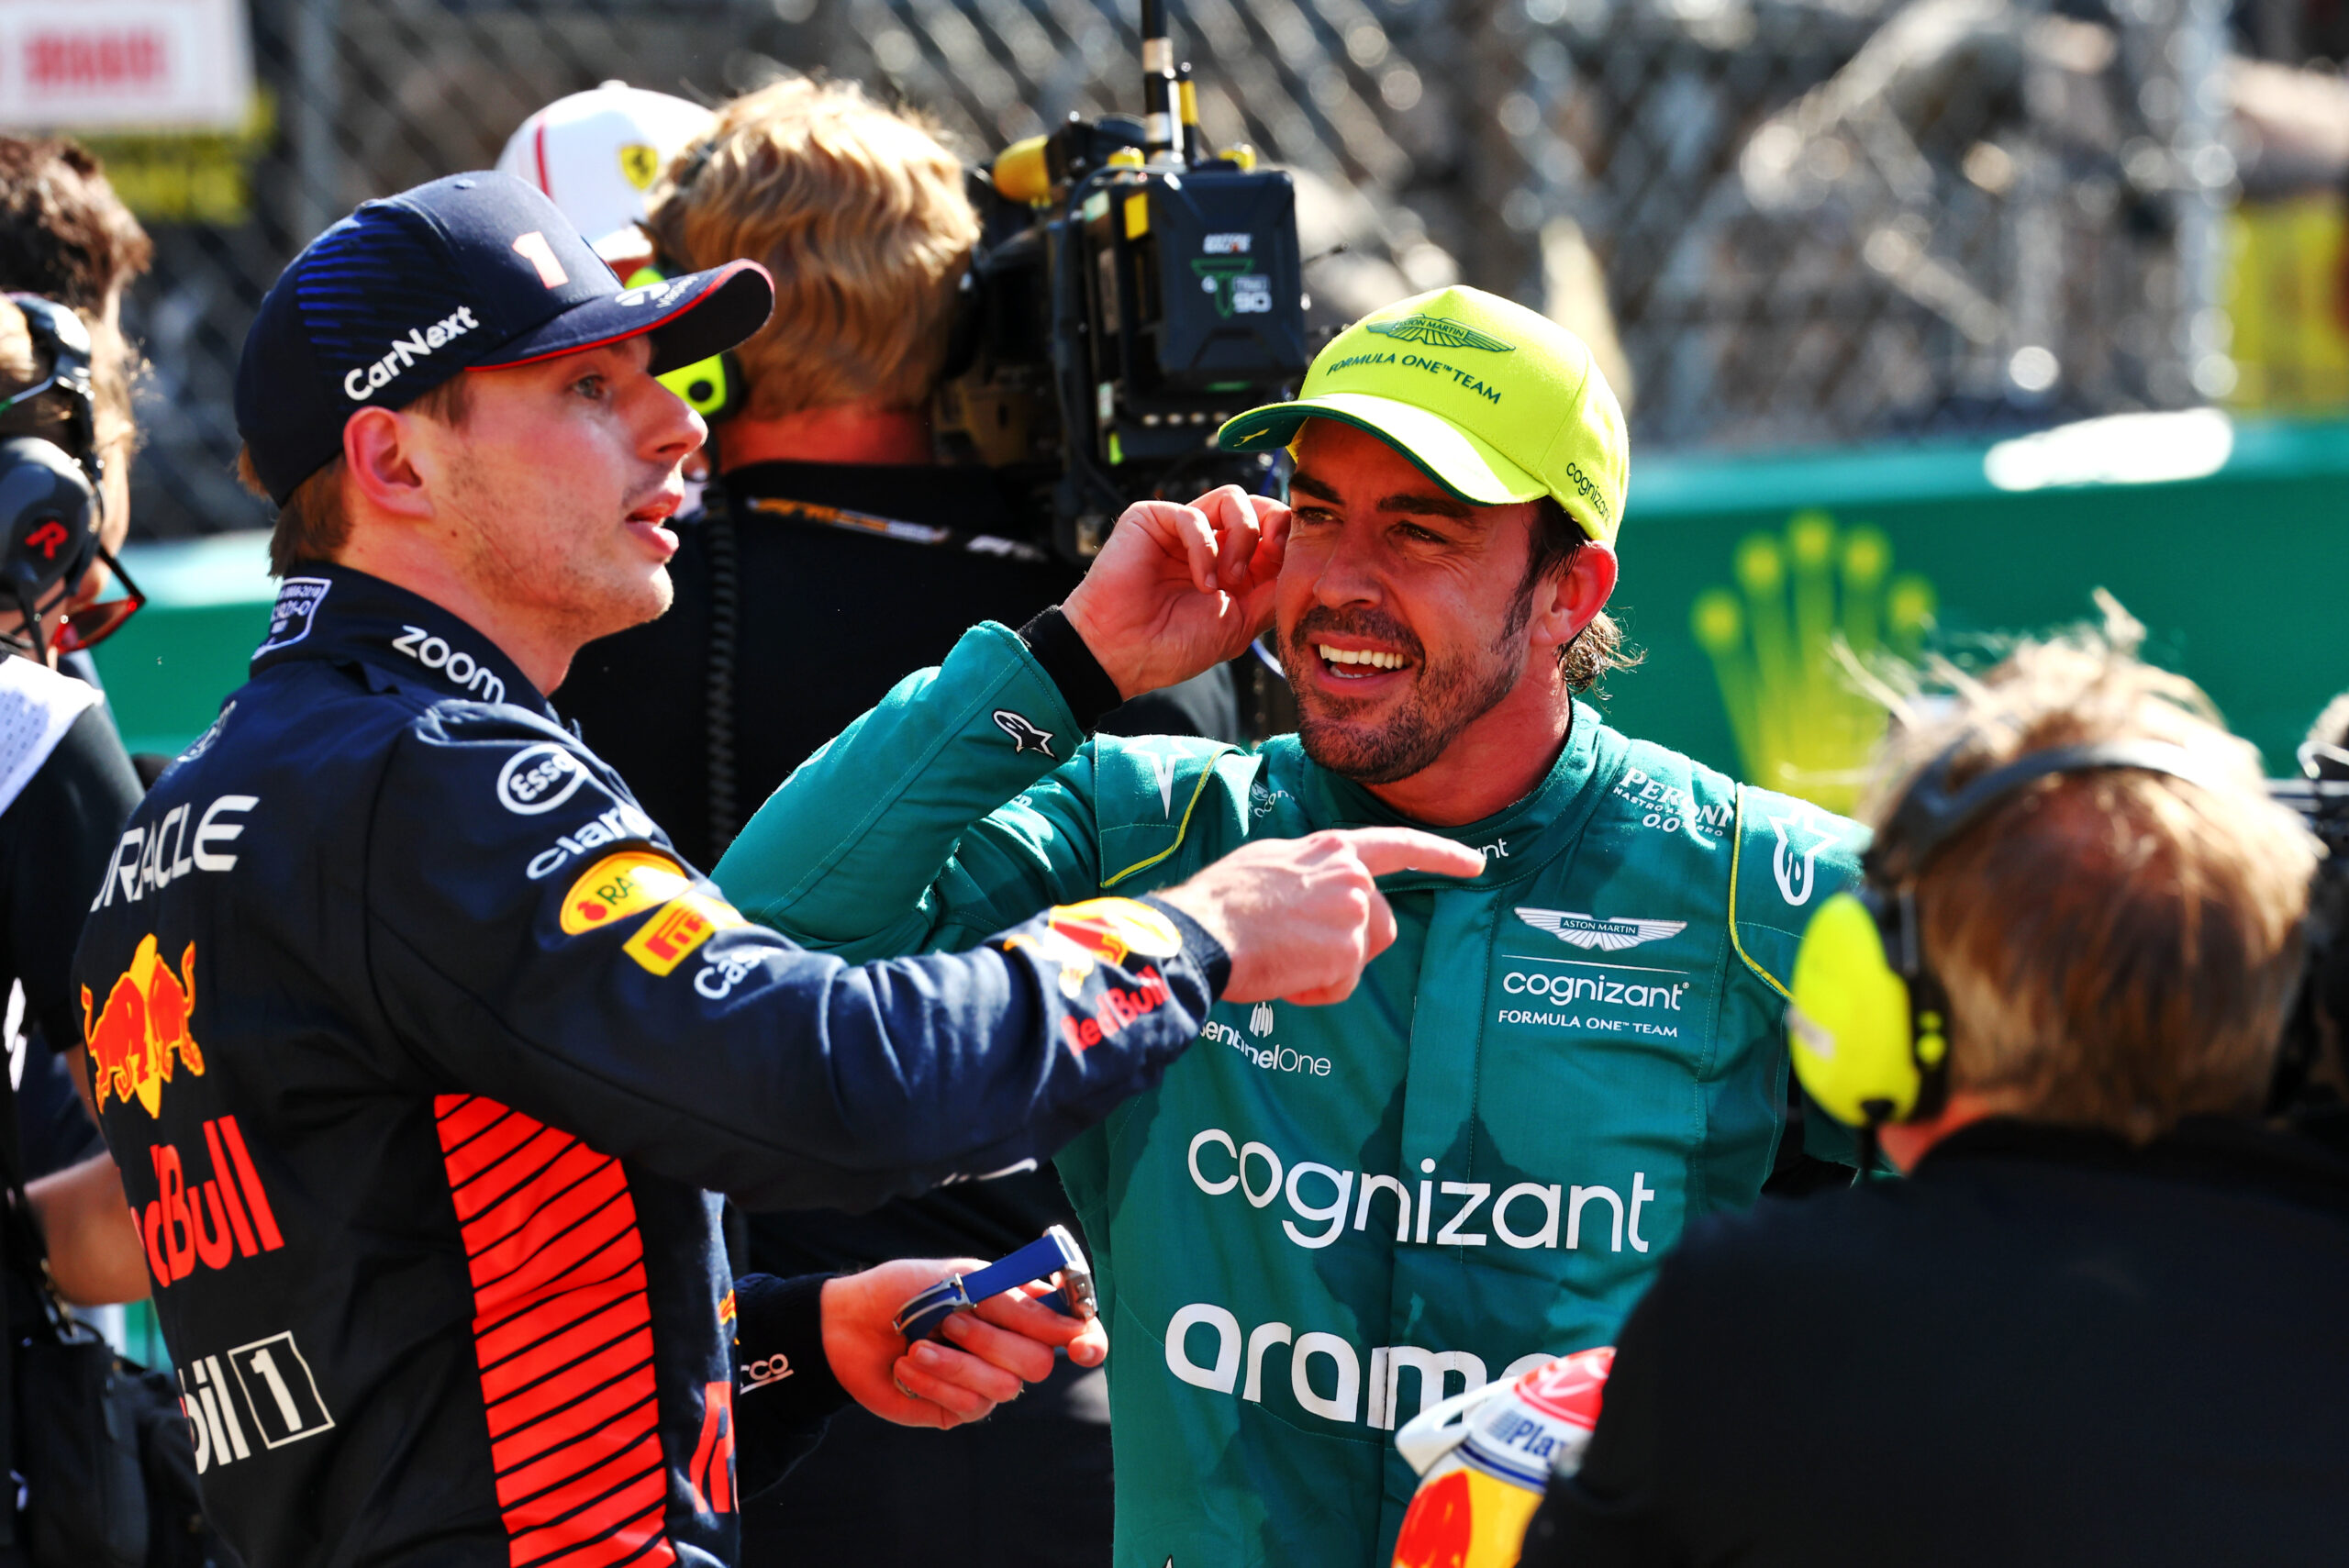 F1: Verstappen elogia Alonso: "Poderia ter conquistado oito títulos mundiais"